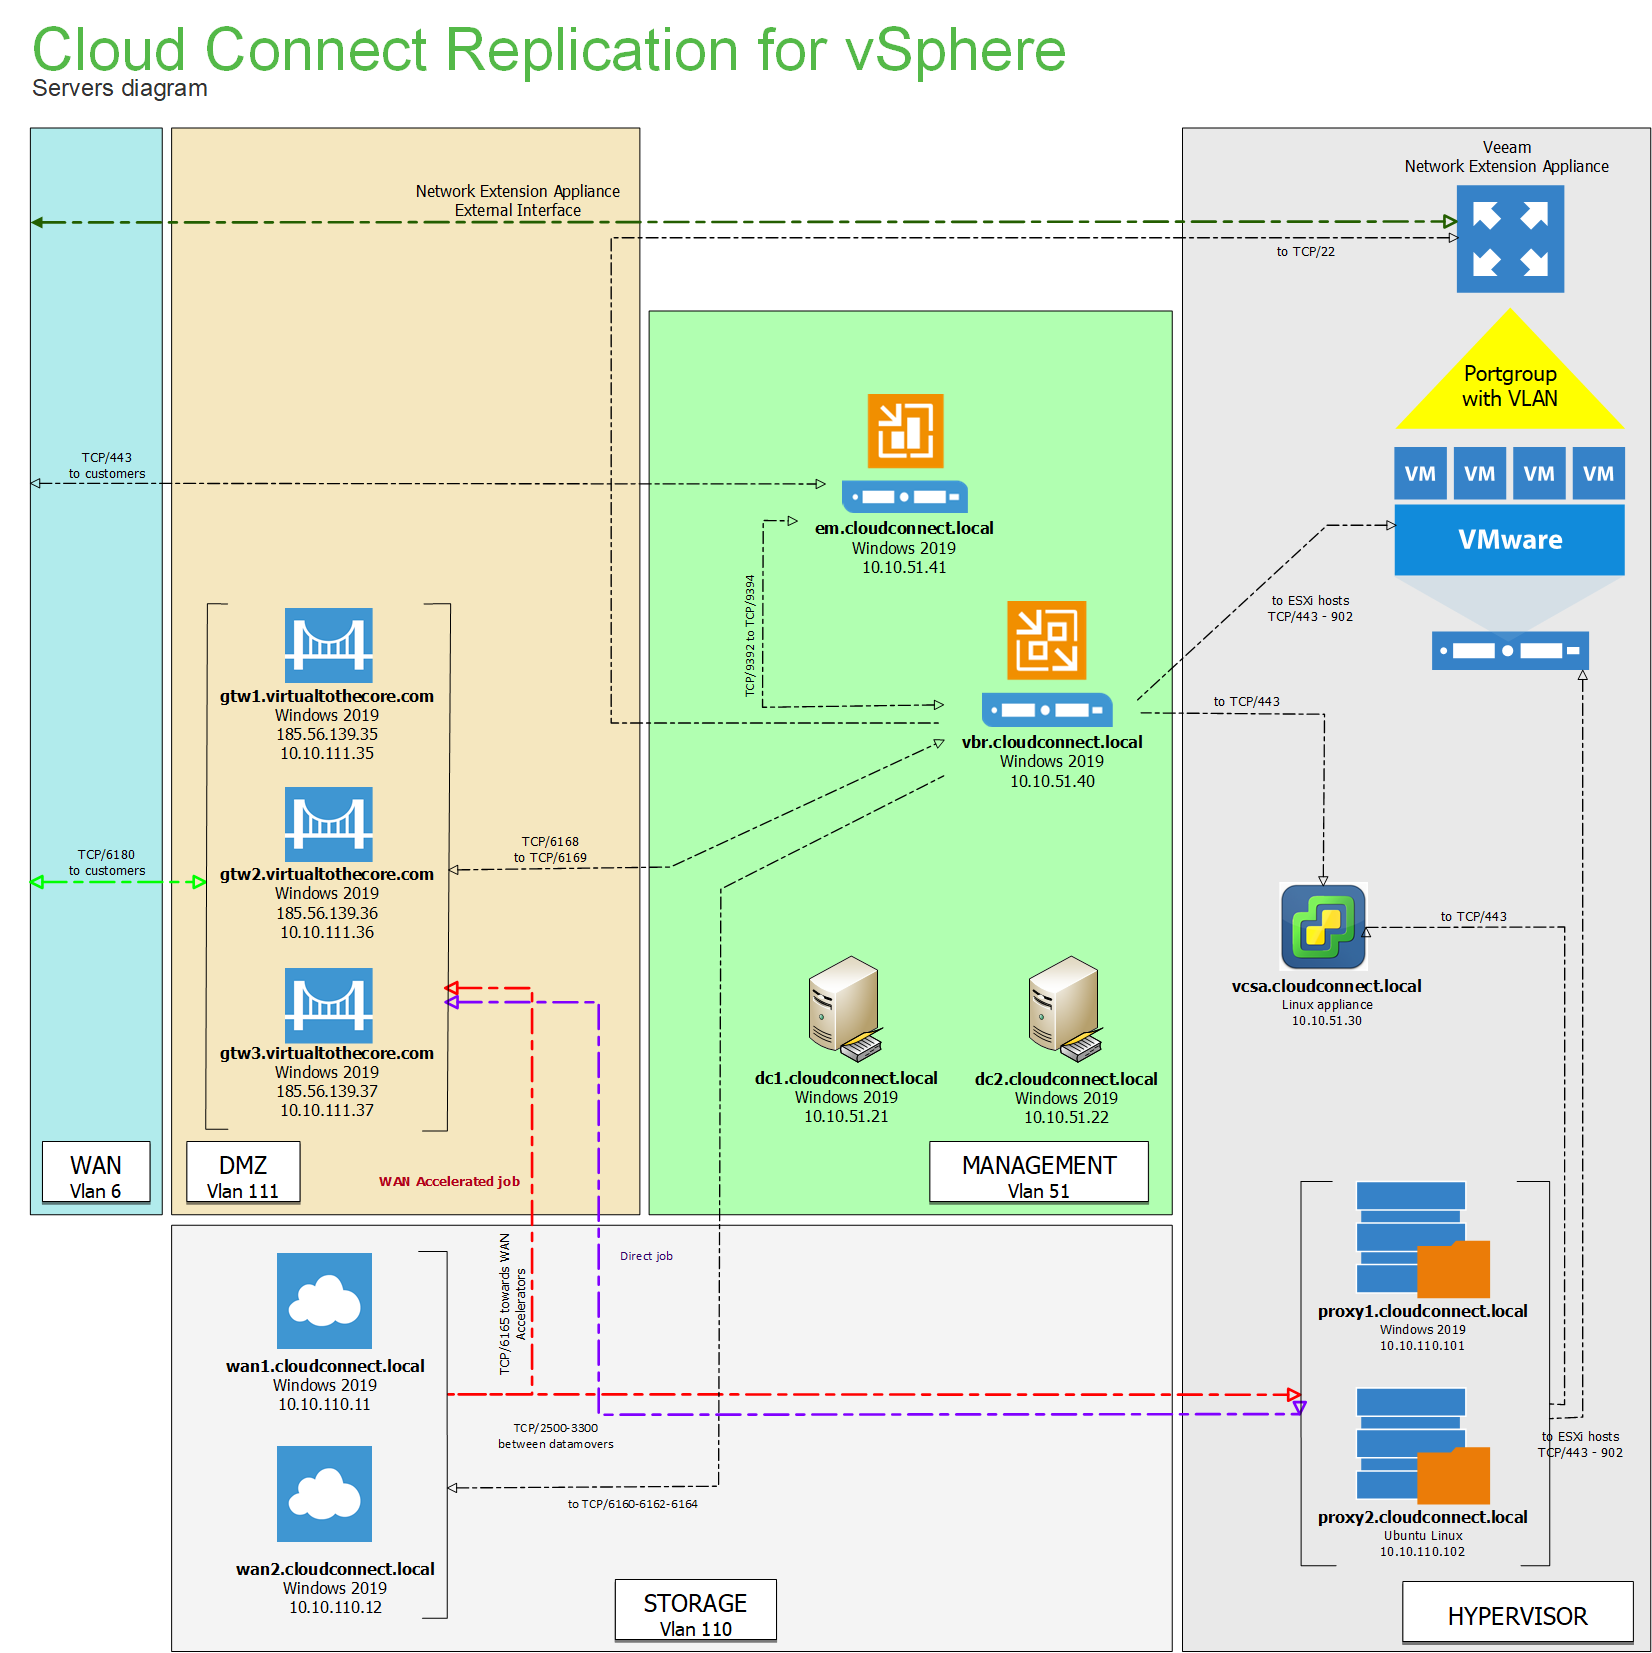 Veeam Cloud Connect Replication servers diagram for vSphere